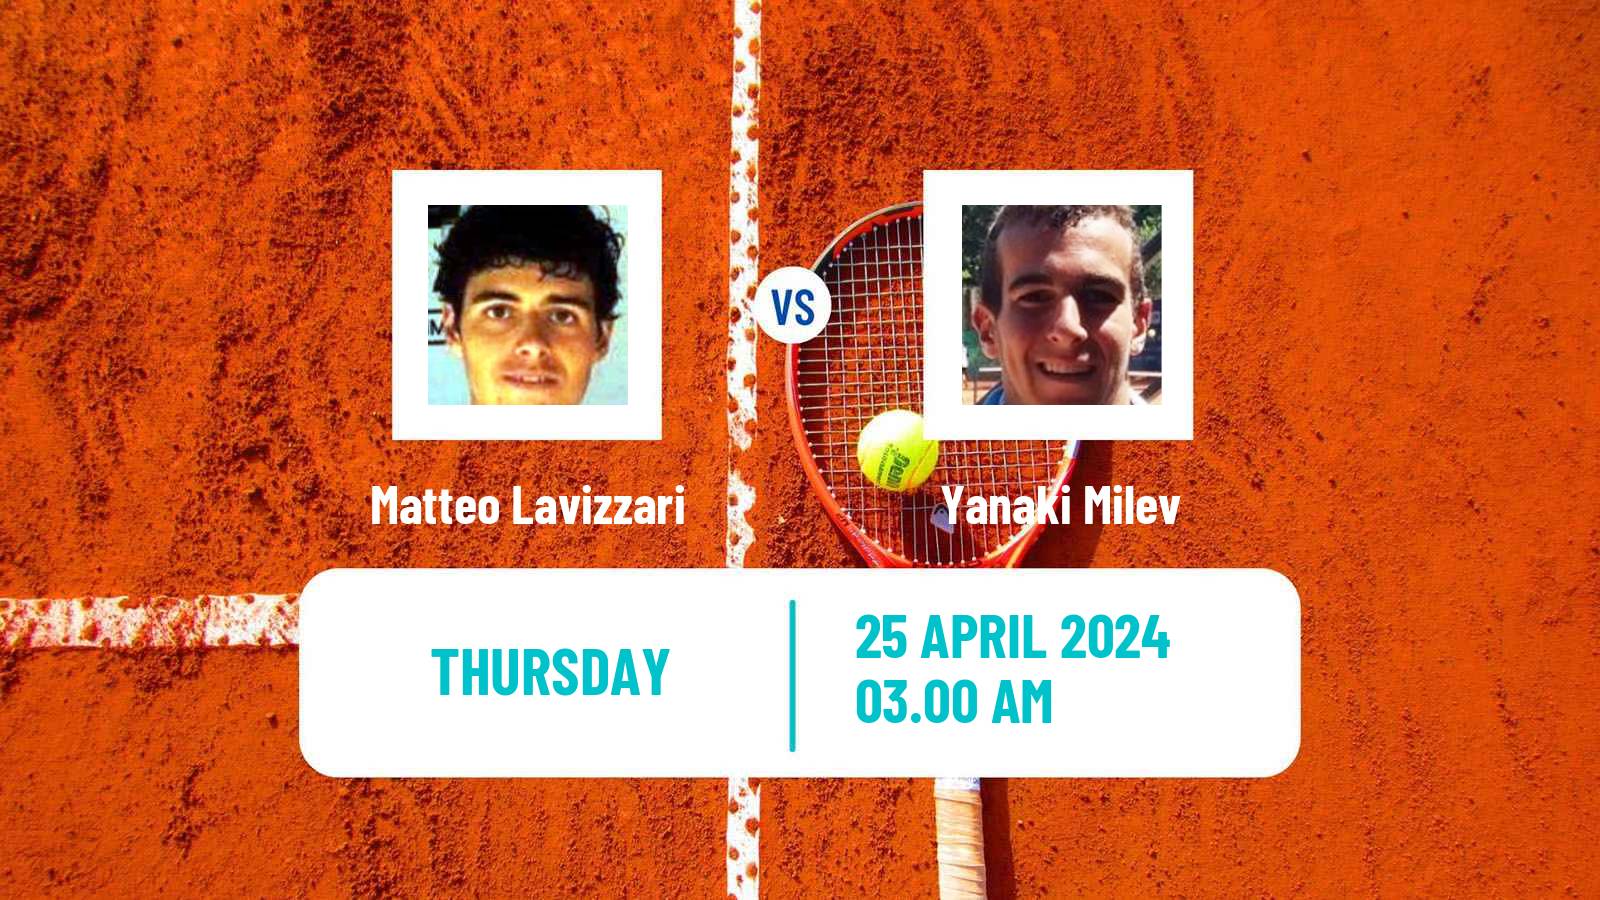 Tennis ITF M15 Antalya 12 Men Matteo Lavizzari - Yanaki Milev